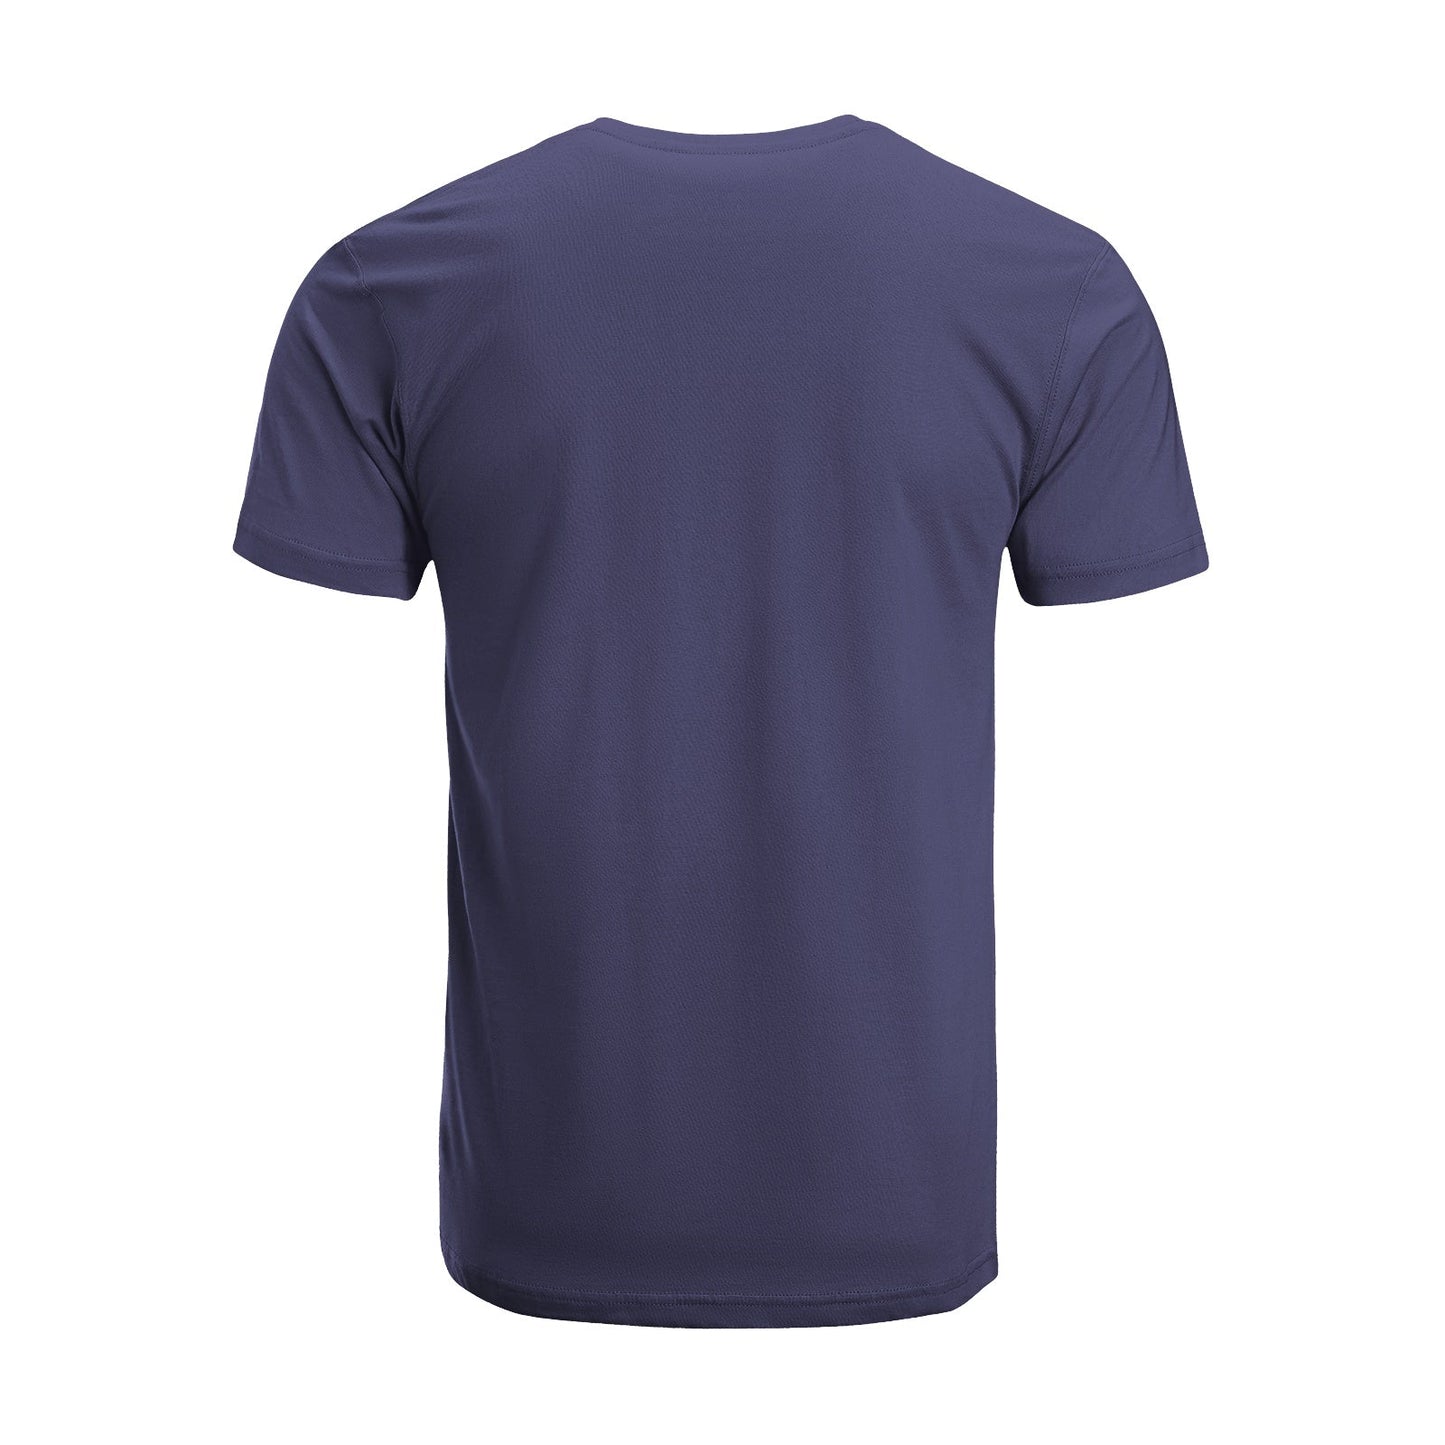 Unisex Short Sleeve Crew Neck Cotton Jersey T-Shirt MOM 06